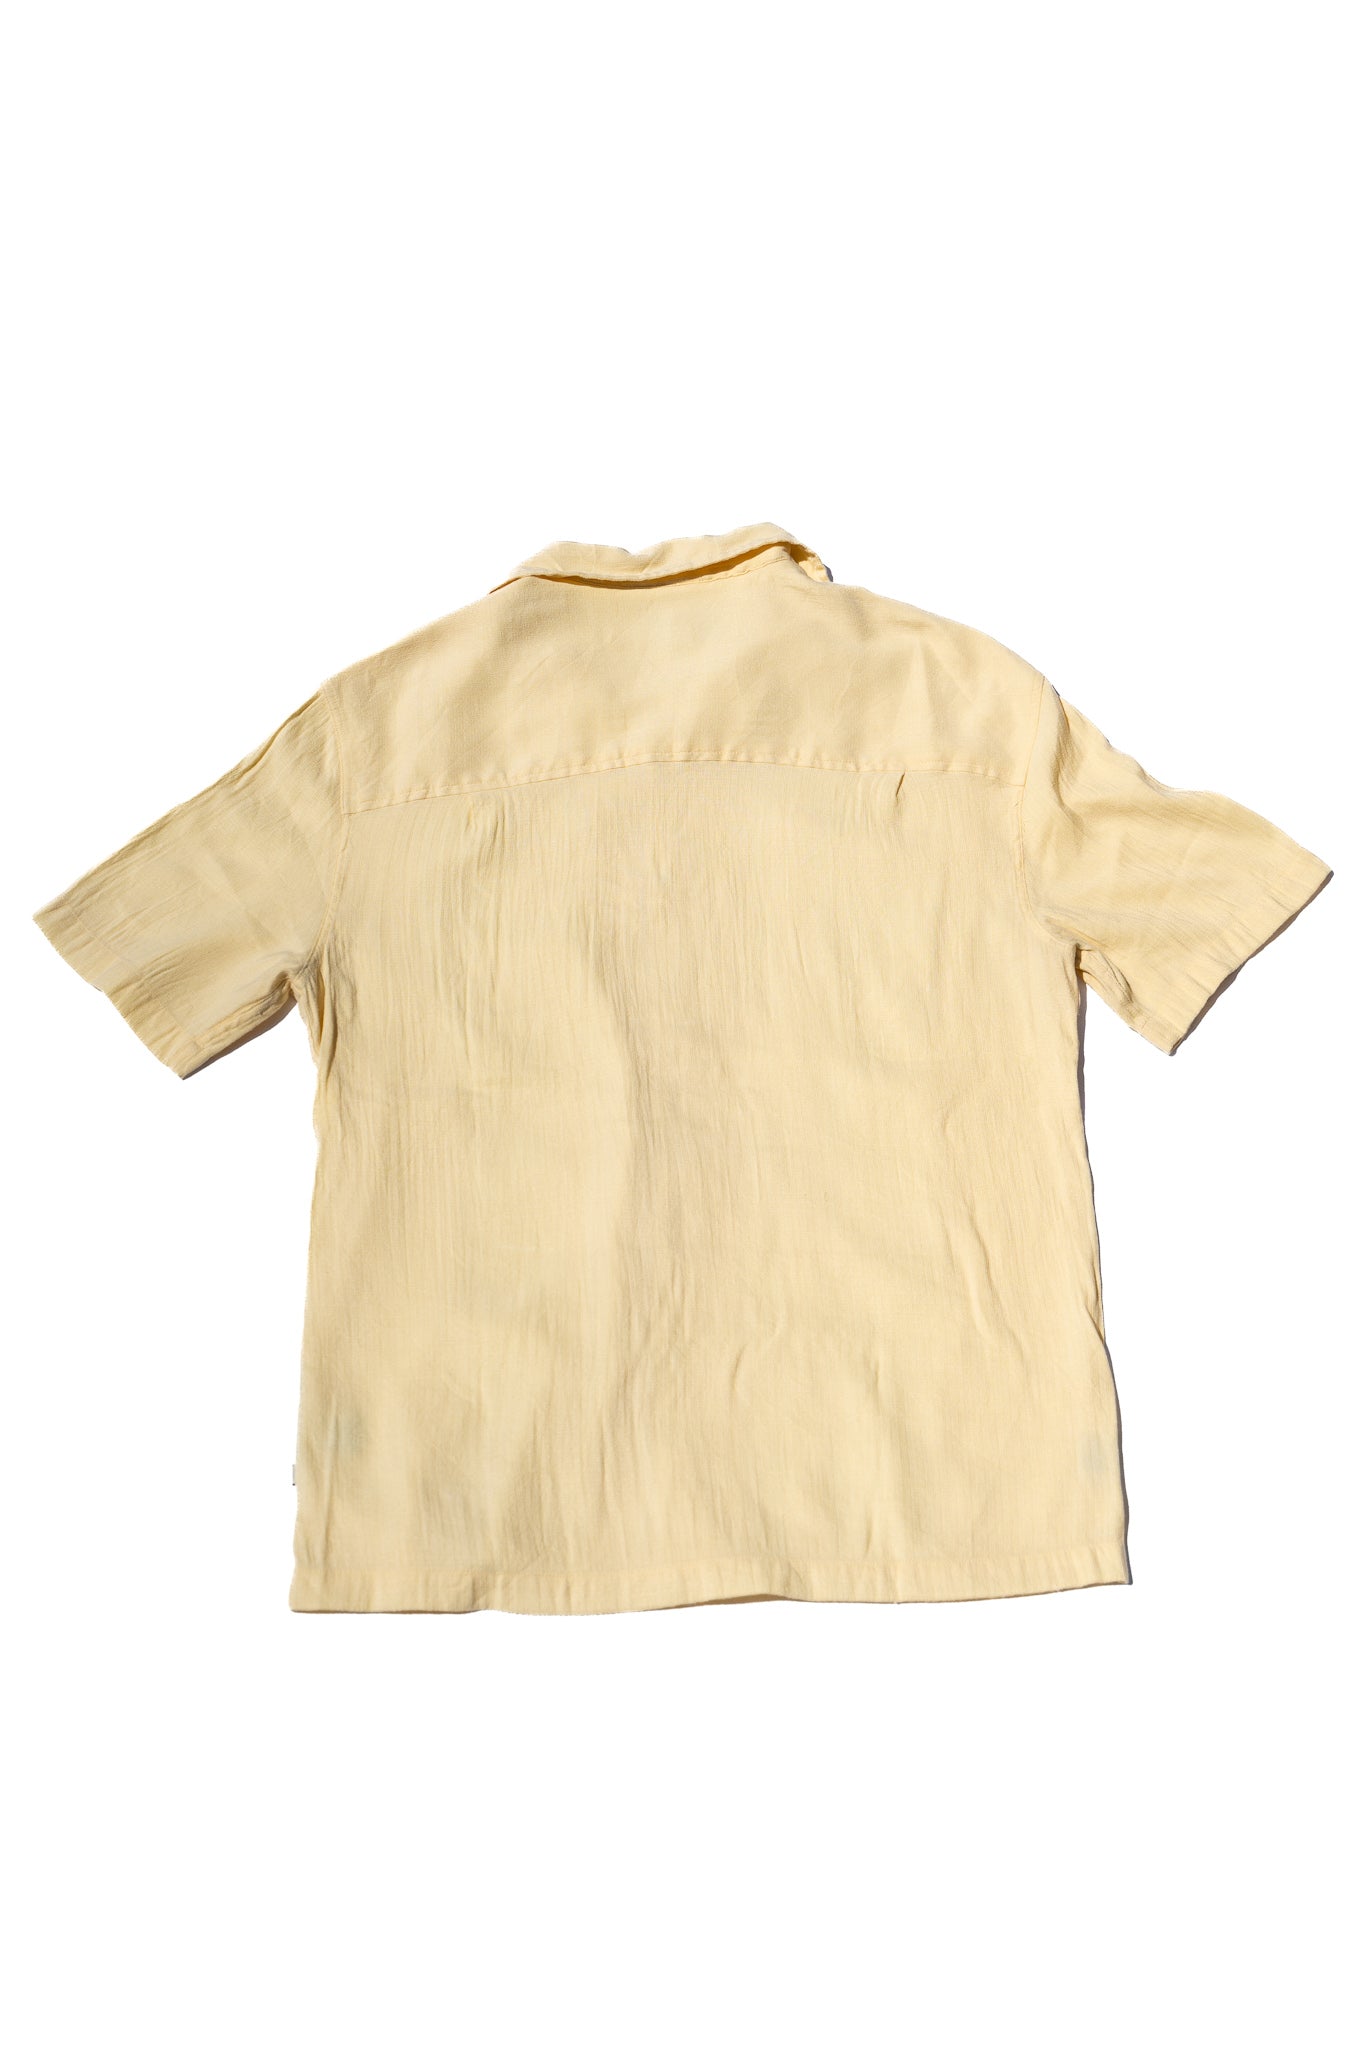 Yellow and White Stripe Aloha Shirt